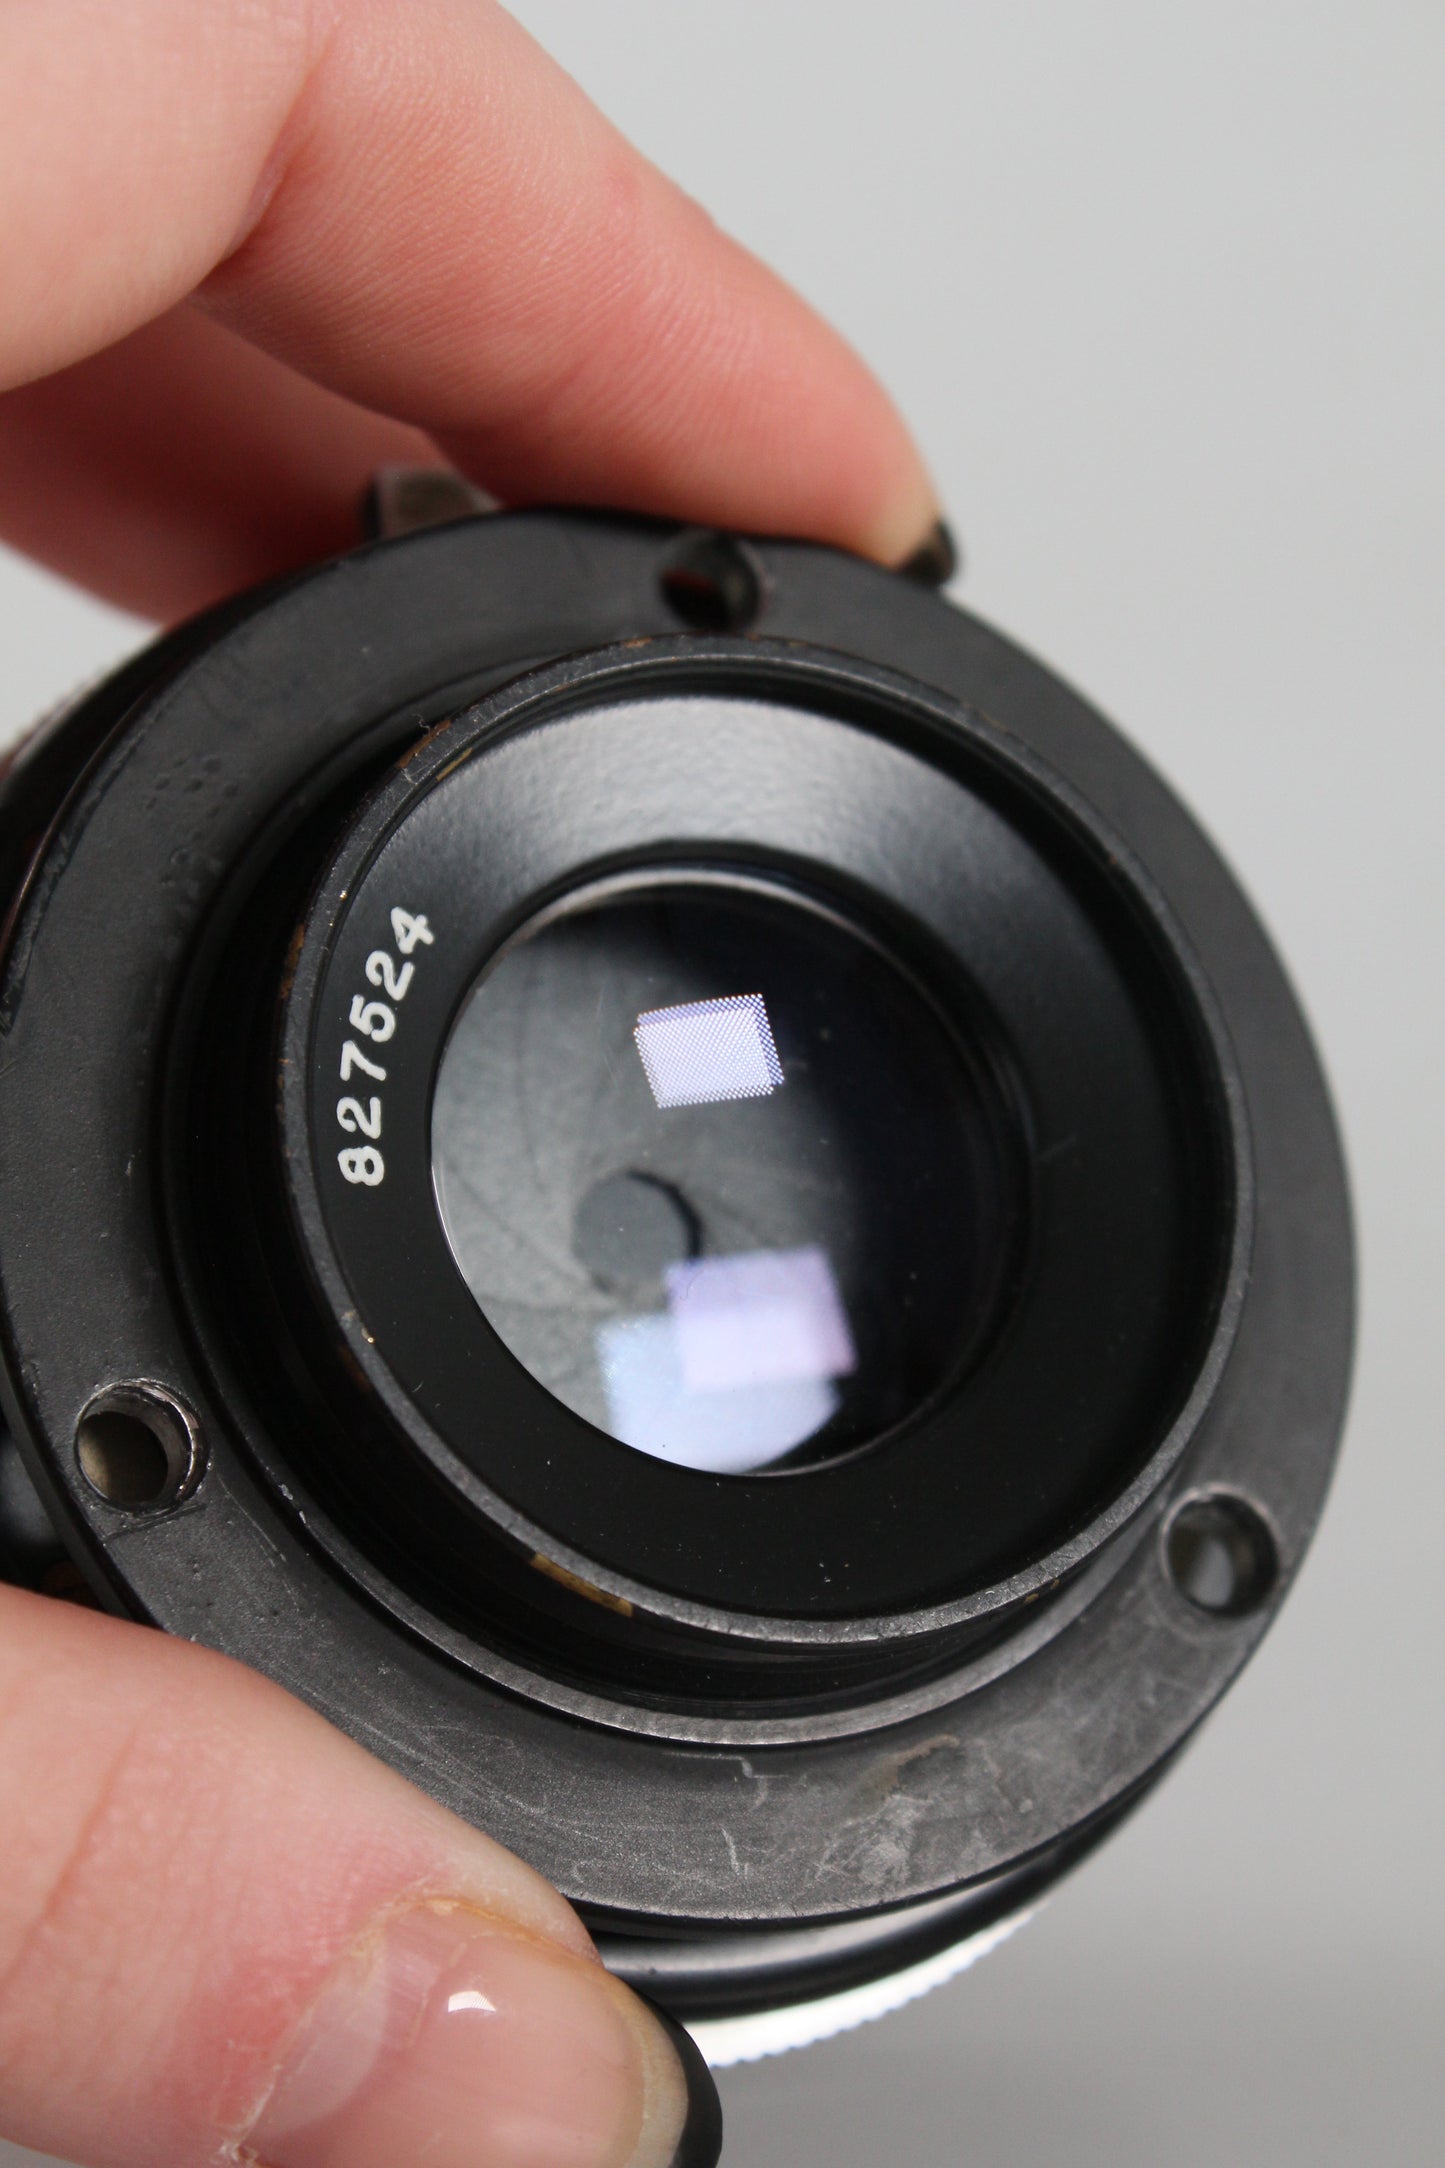 C P Goerz Apochromat Artar 9.5 9 1/2 inch F9 Lens - Red Dot in shutter Large format